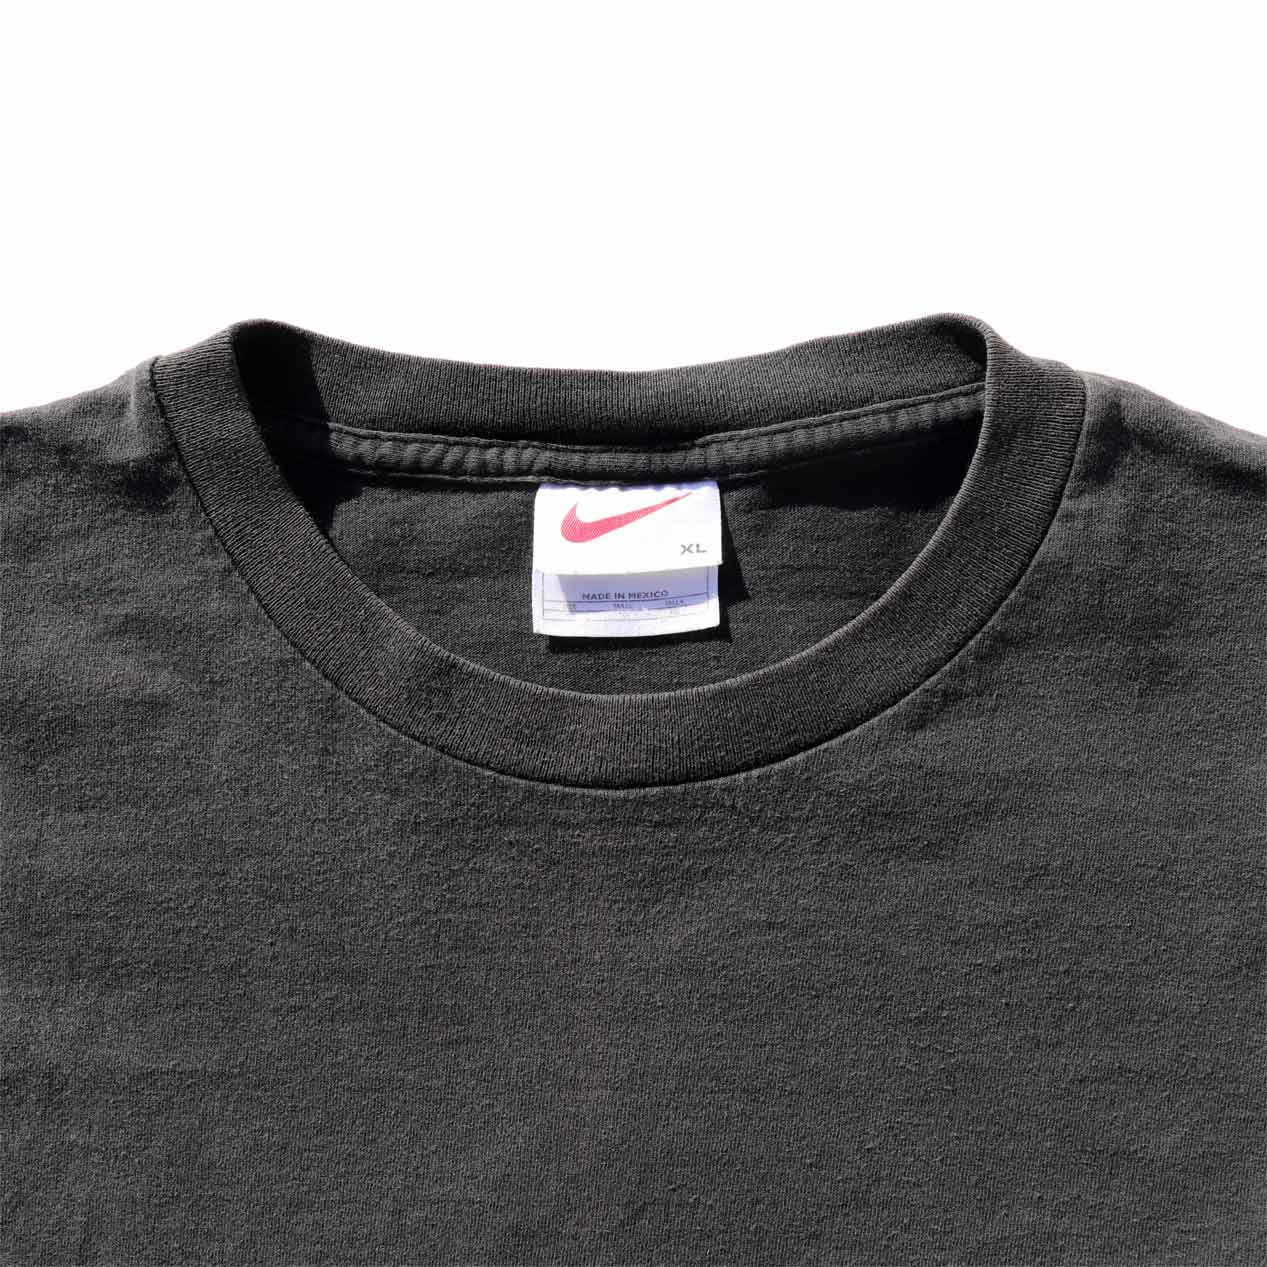 Post Junk 90 S Nike Just Do It Tシャツ Xl